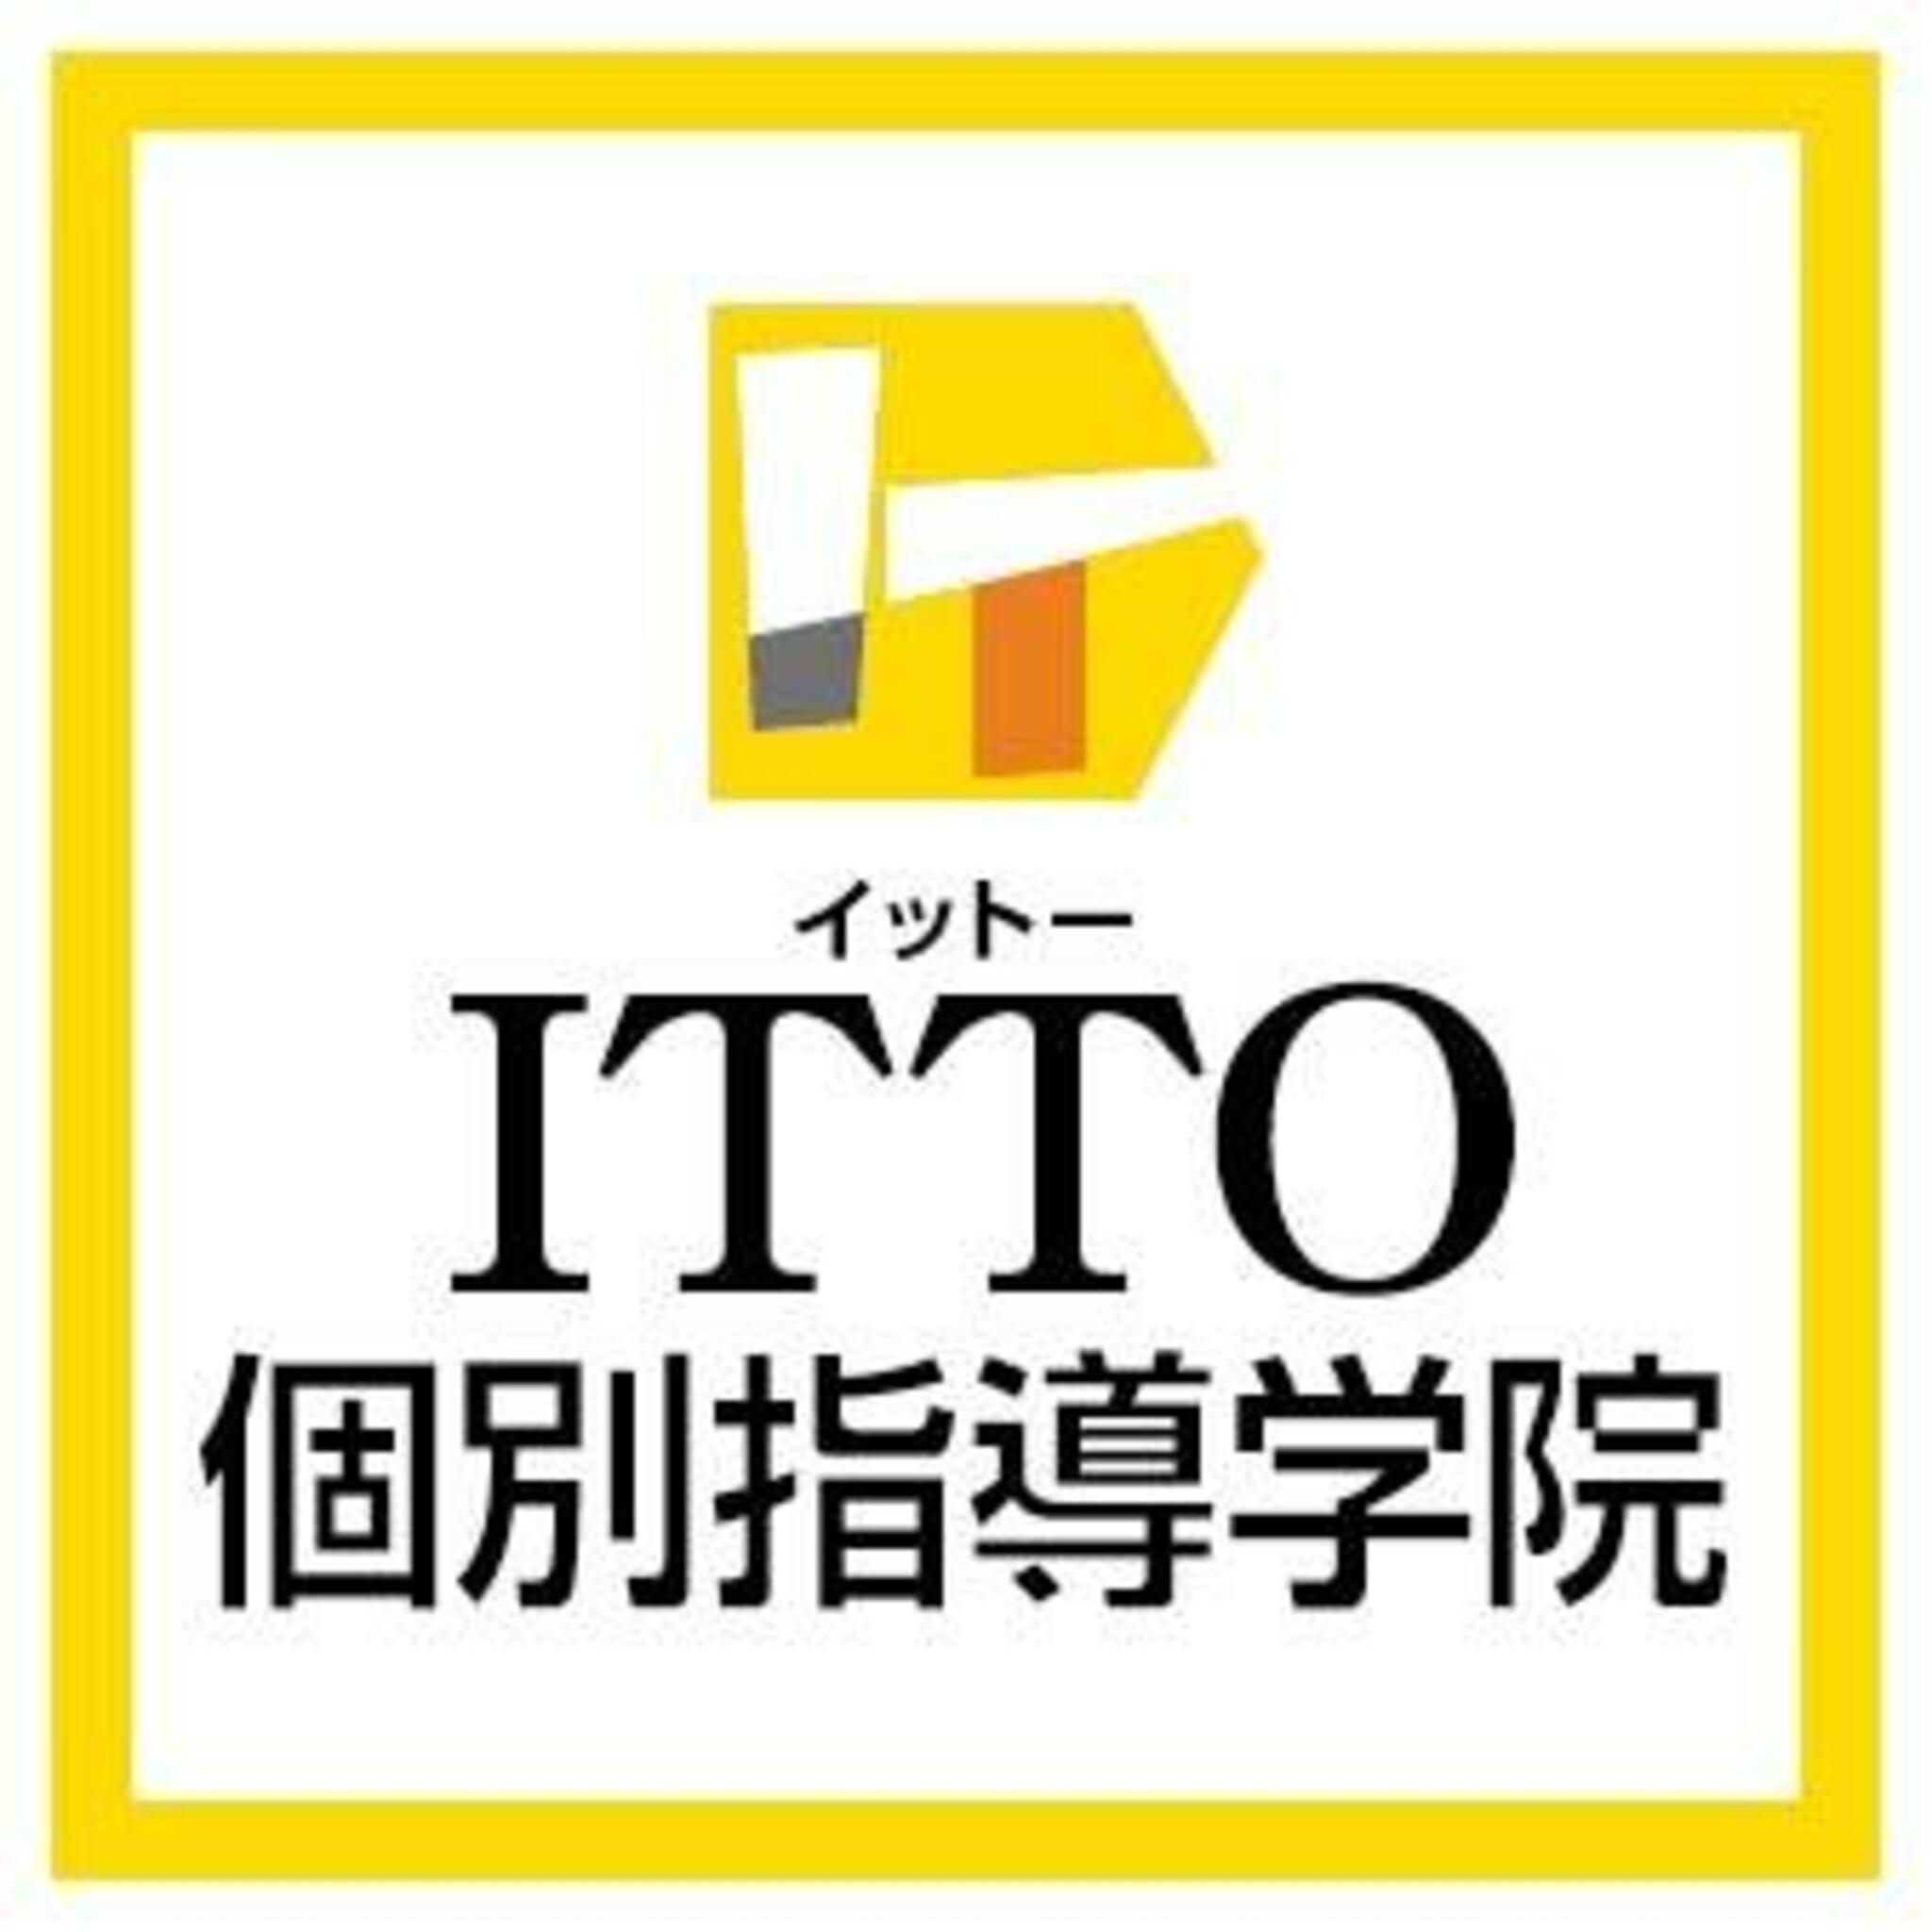 ITTO個別指導学院 庄内通校の代表写真8